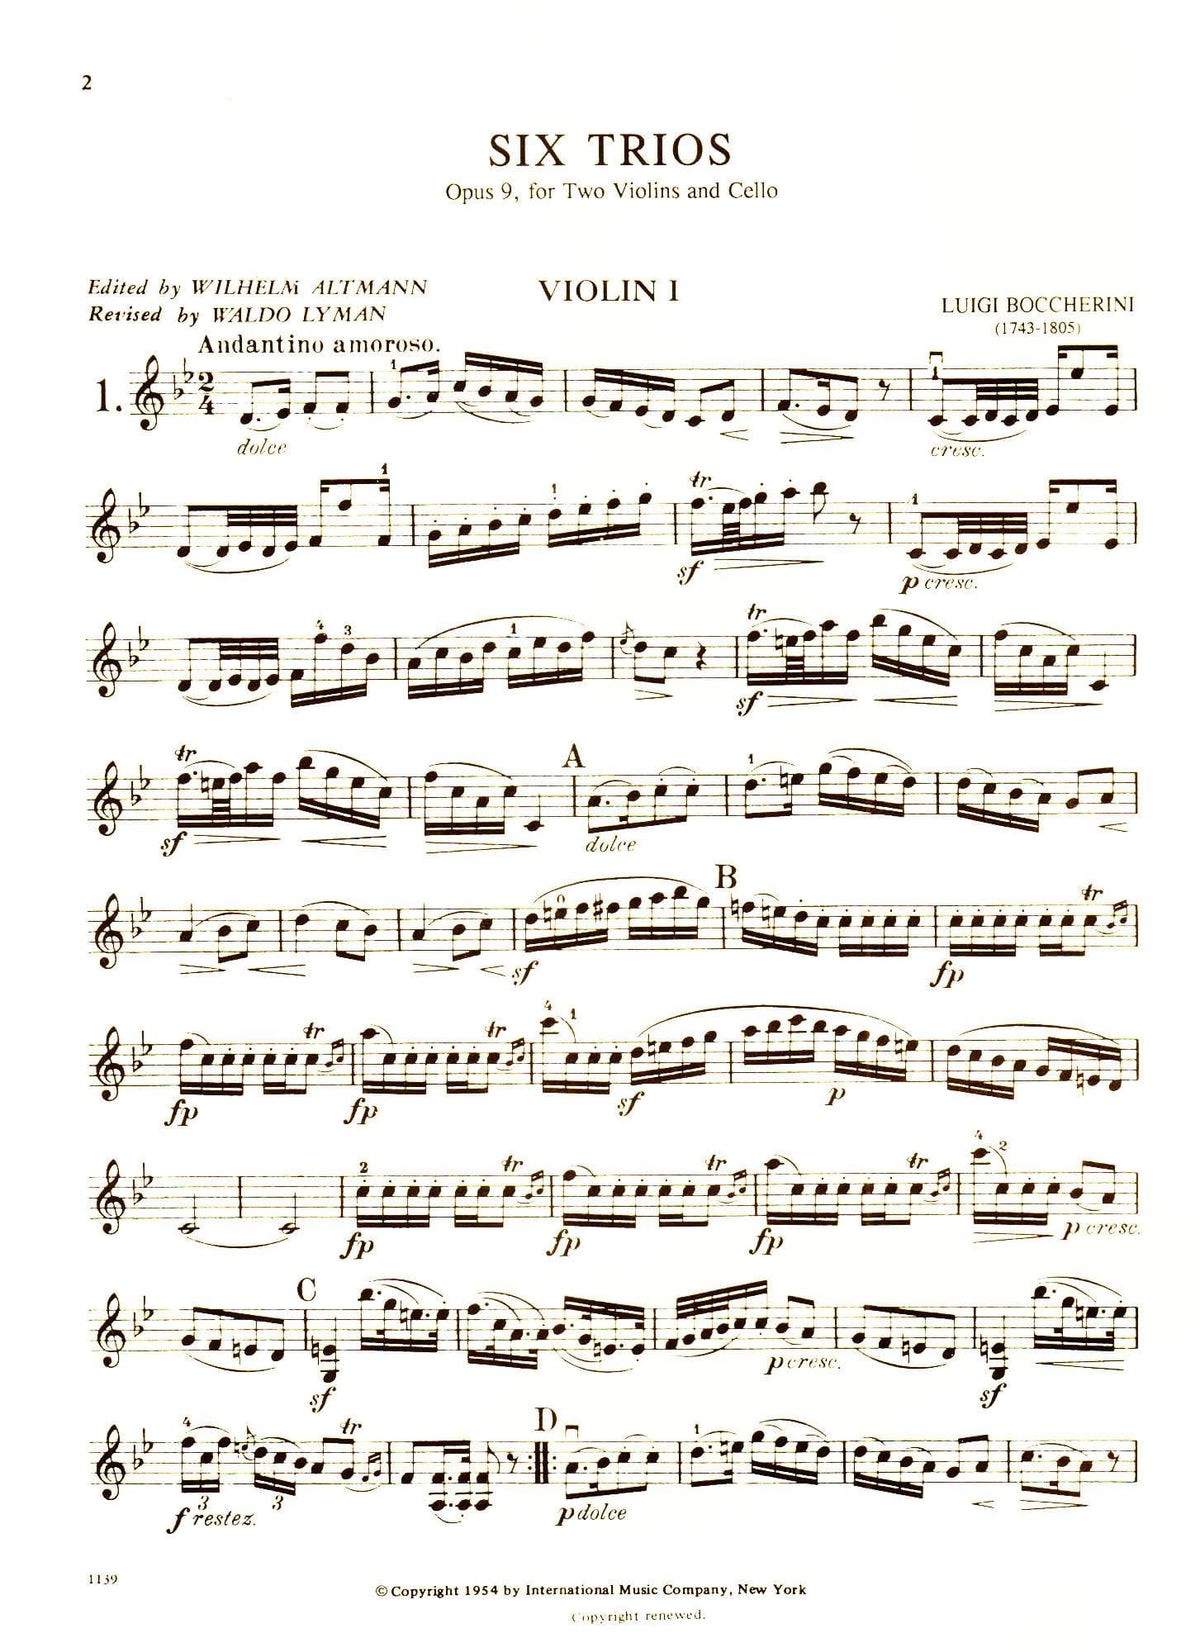 Boccherini, Luigi - 6 Trios Op 9 G 89-94 for Two Violins and Cello - Arranged by Altmann-Lyman - International Edition